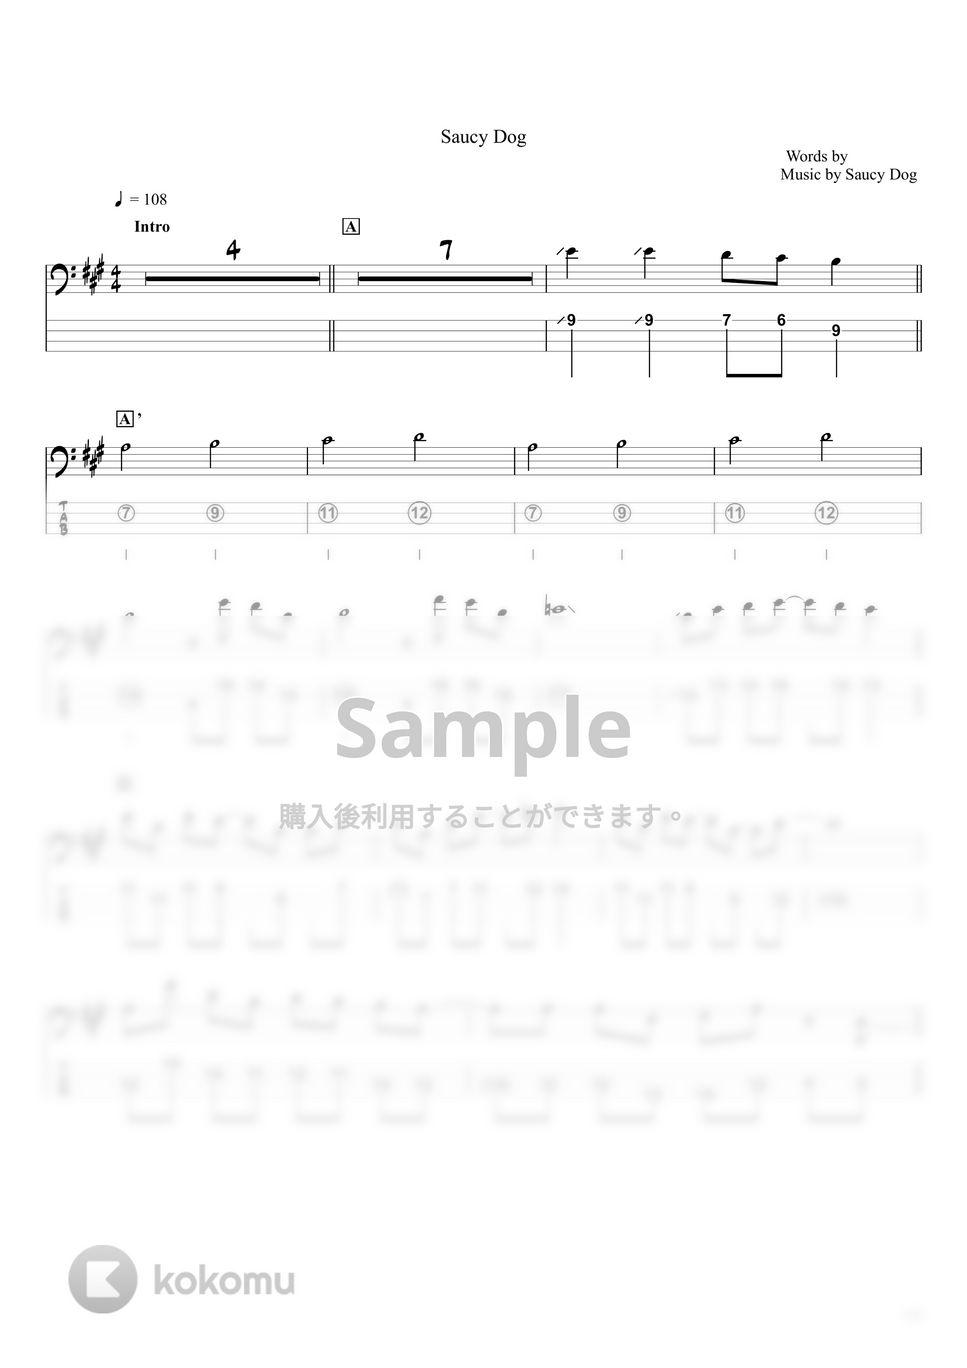 Saucy Dog - シンデレラボーイ (ベースTAB譜☆4弦ベース対応) by swbass